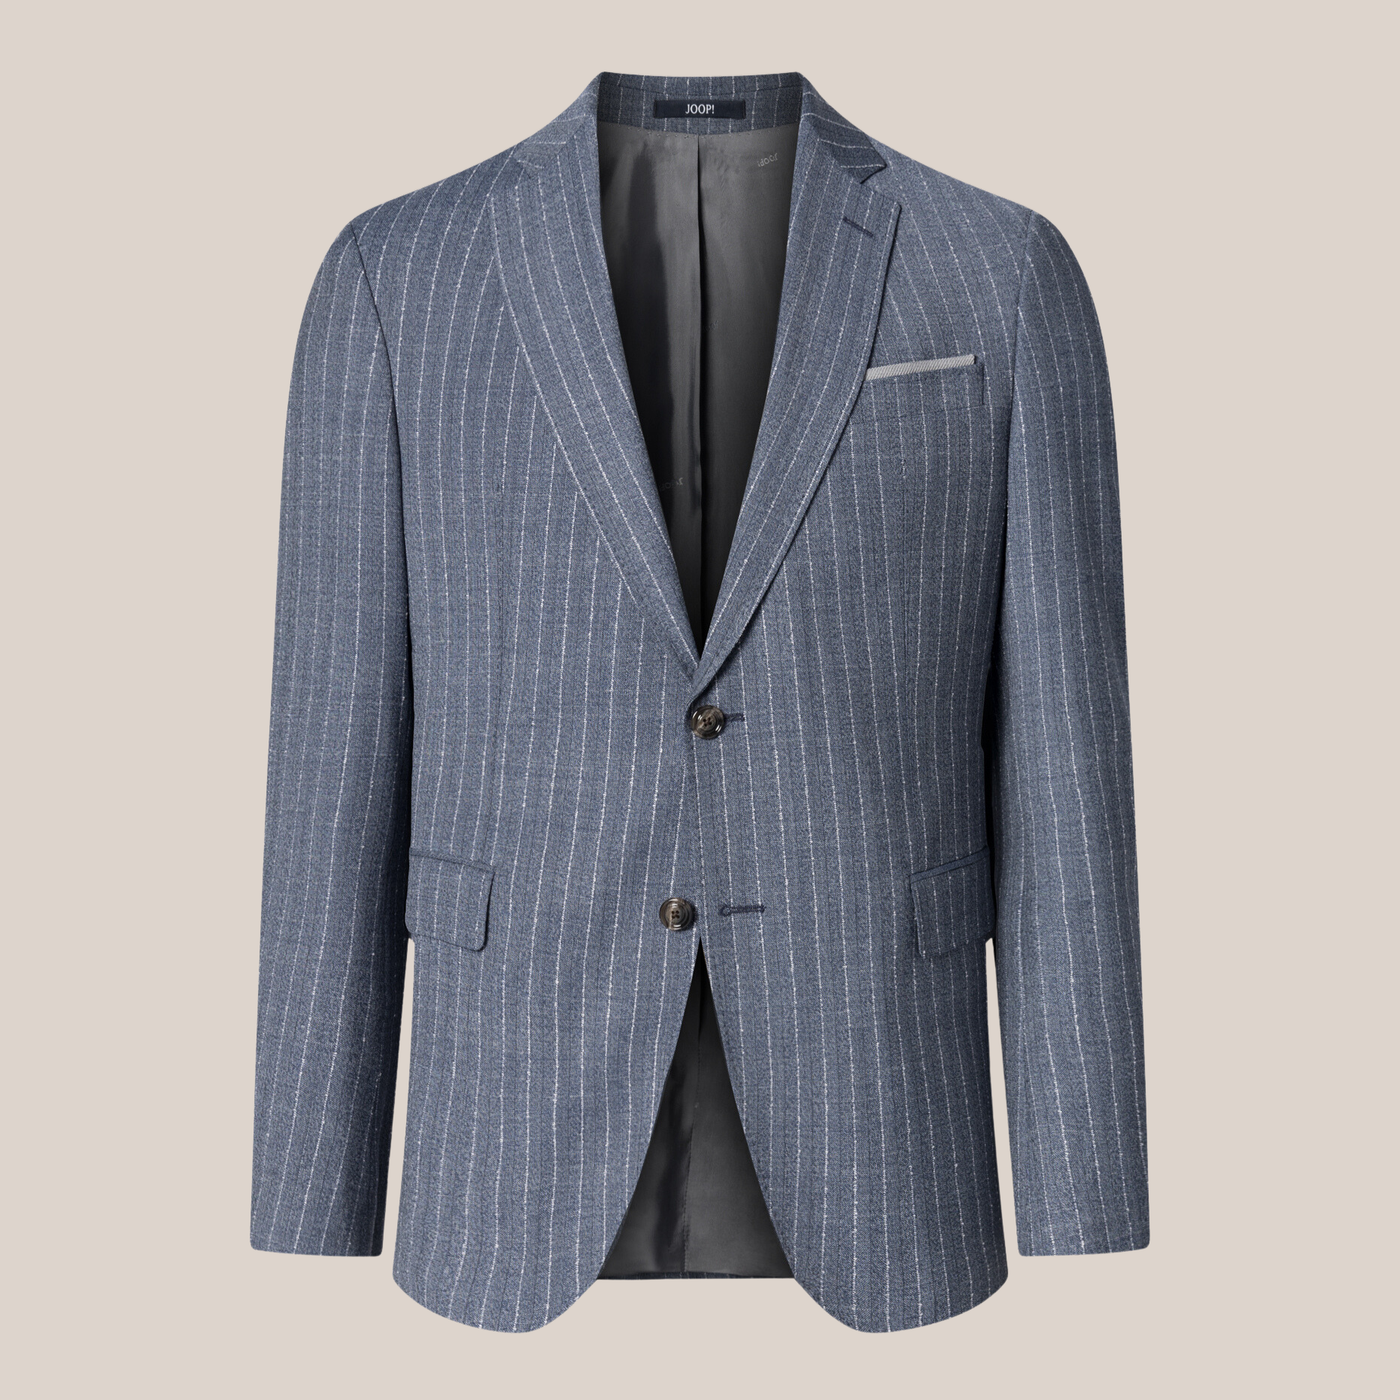 Gotstyle Fashion - Joop! Suits Broken Pinstripe Stretch Wool Suit - Blue